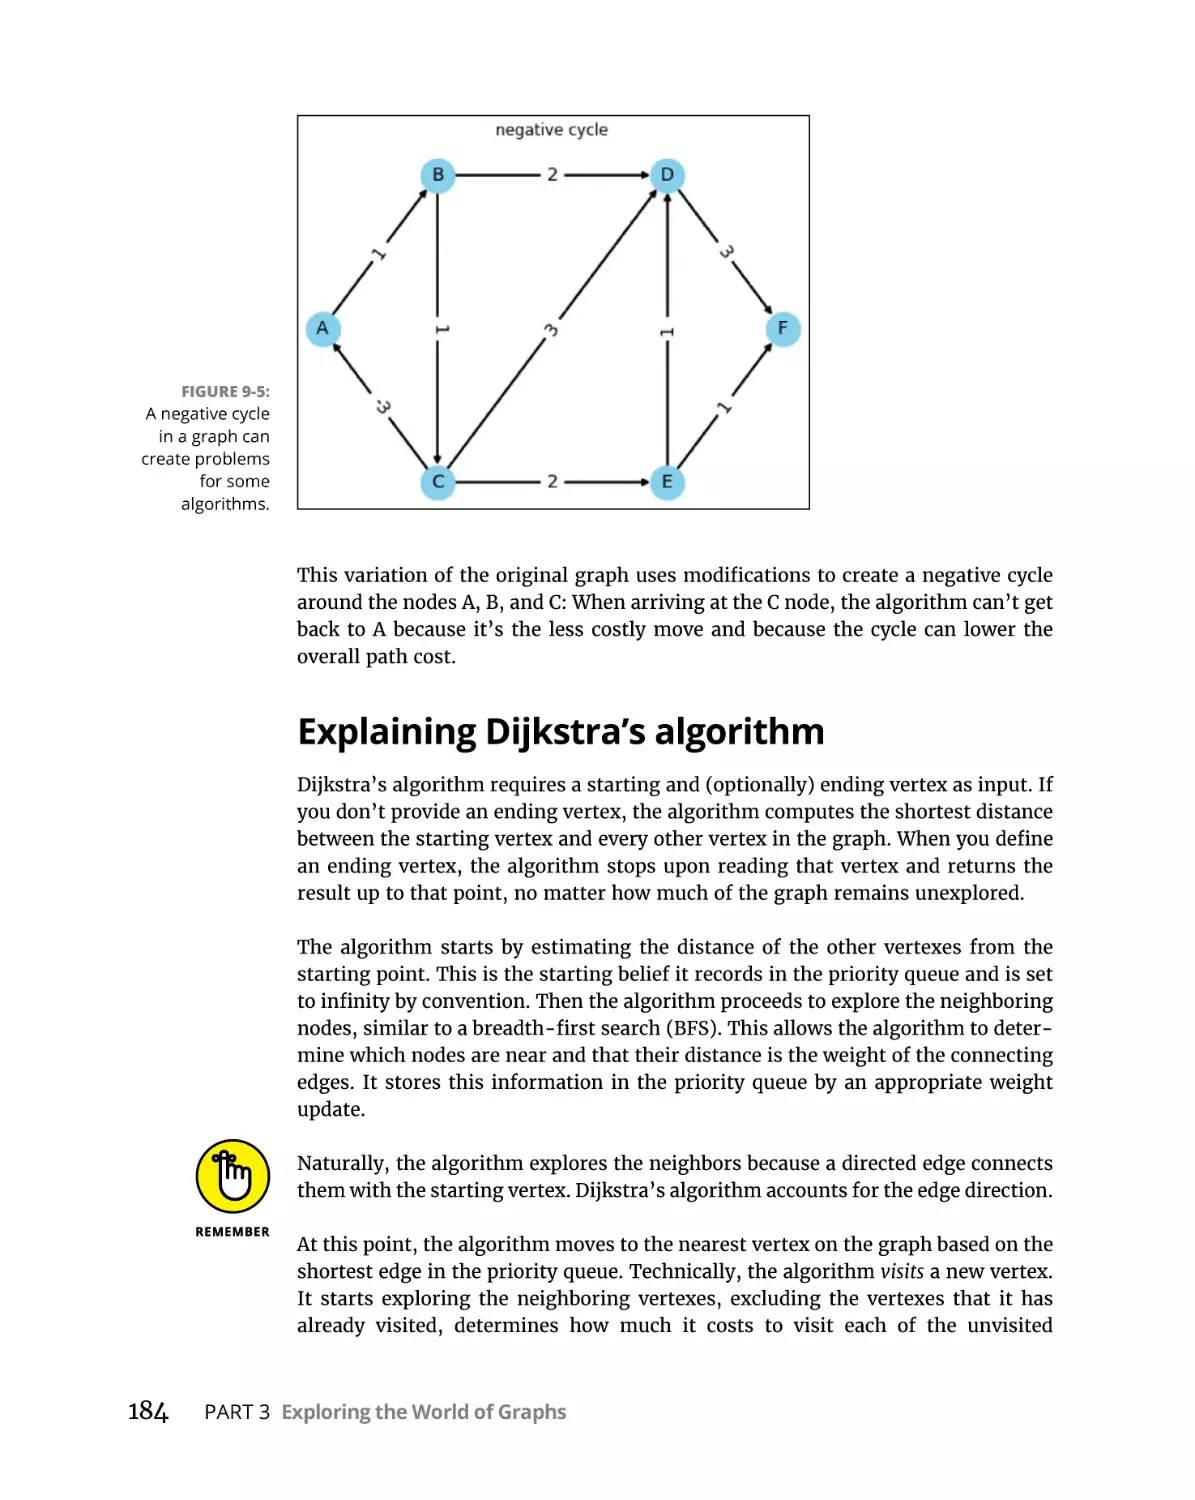 Explaining Dijkstra’s algorithm